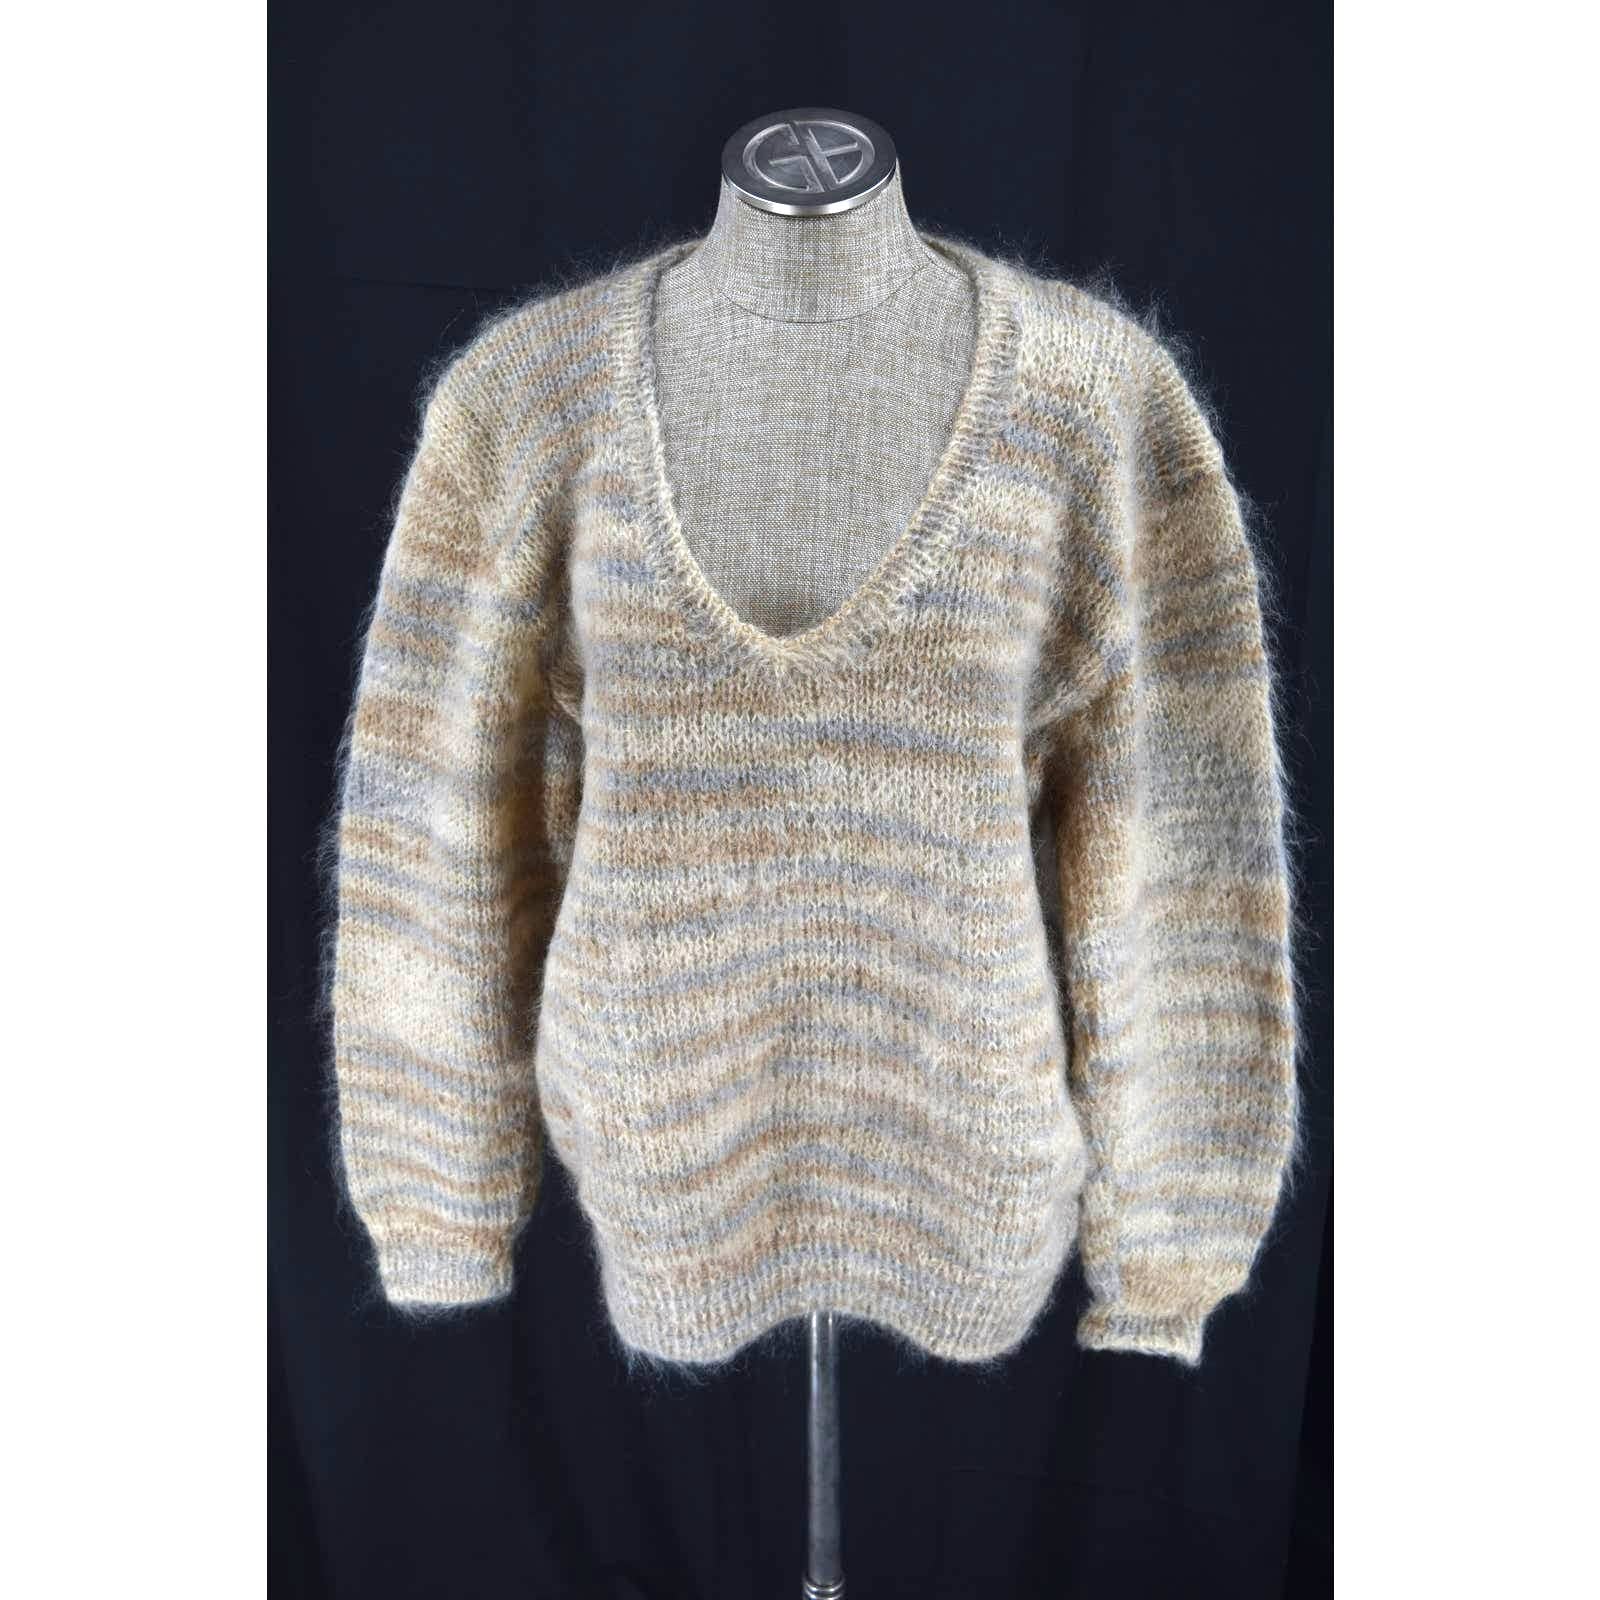 Handmade Hand Knit Tan V-Neck Sweater - L